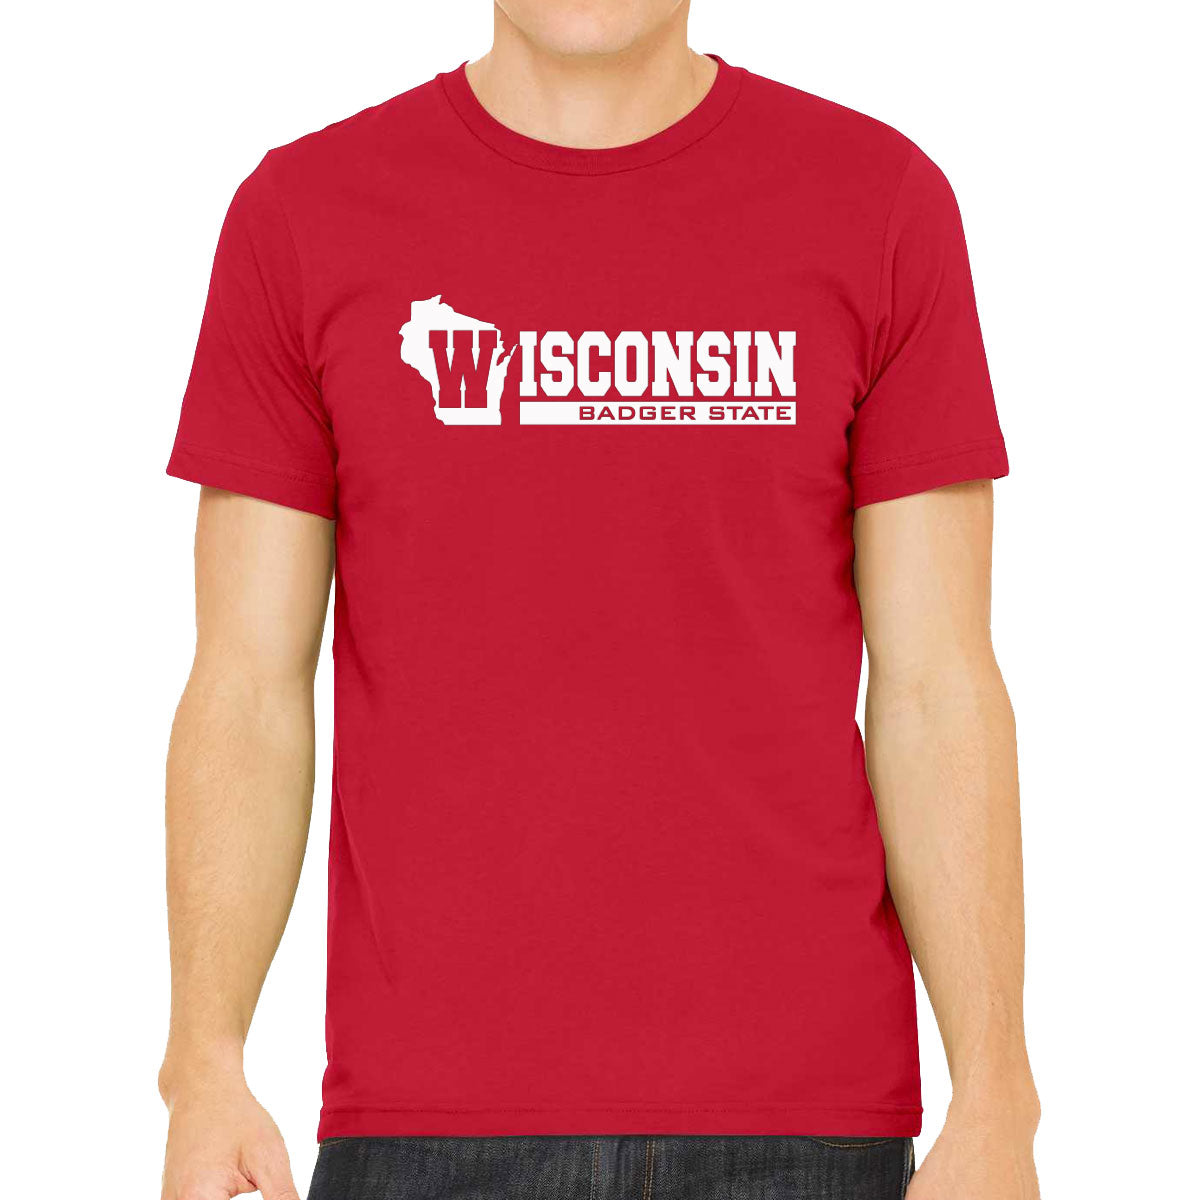 Wisconsin Badger State Men's T-shirt